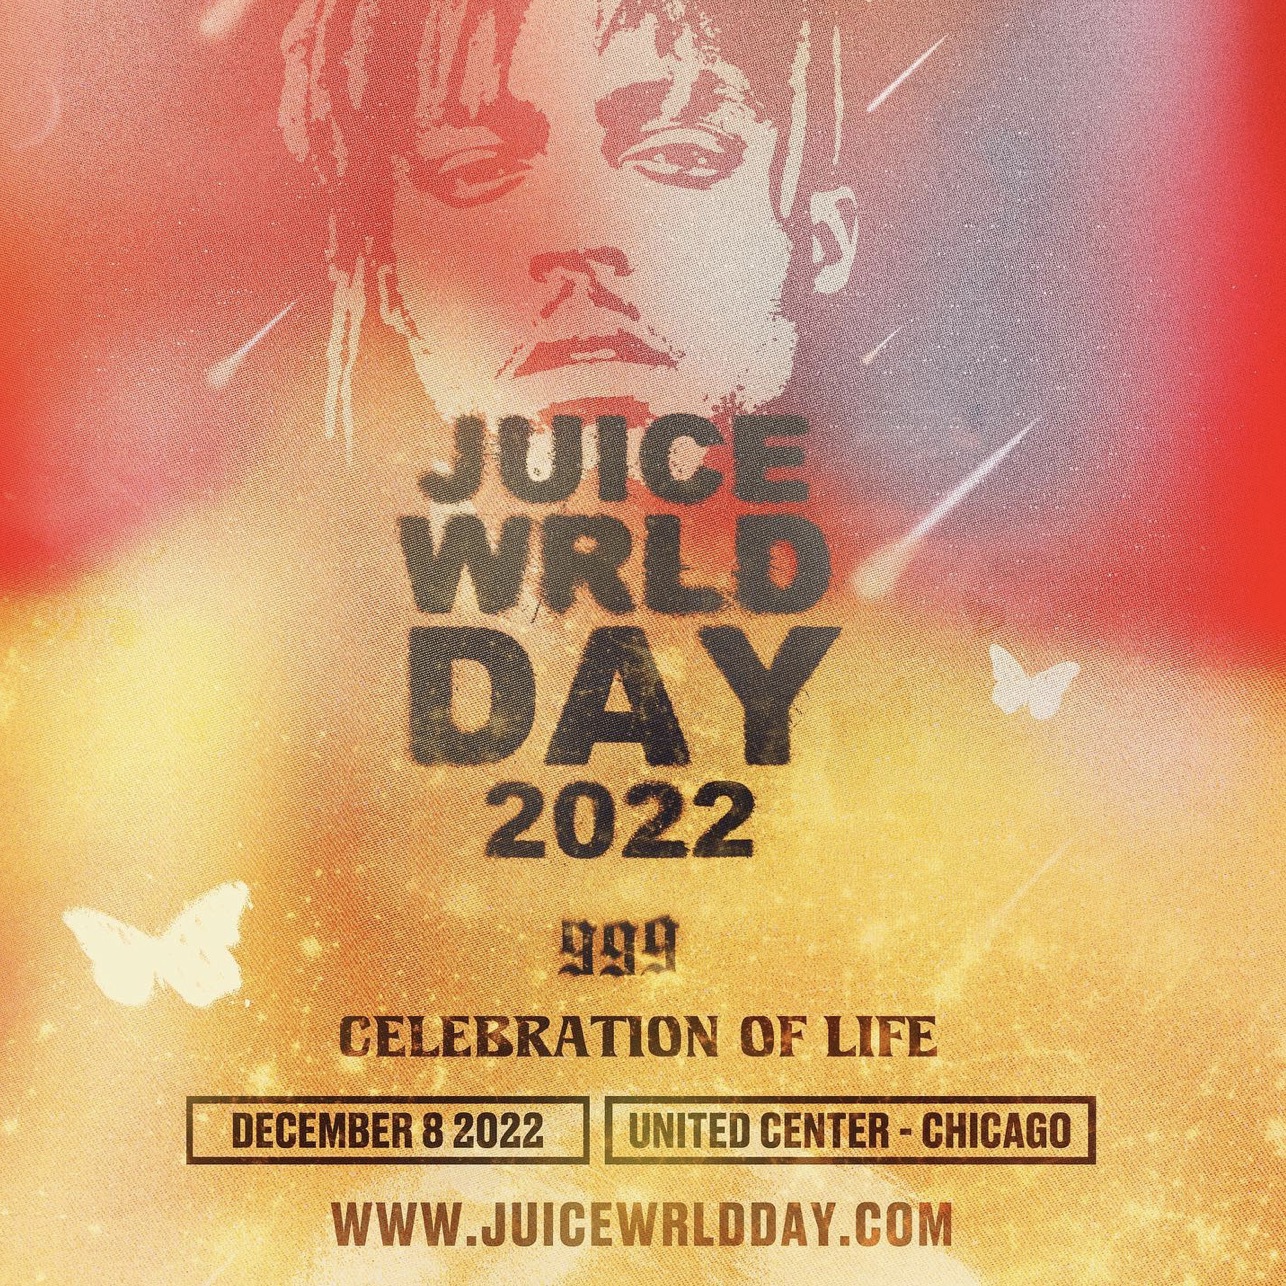 Juice WRLD Day 2022 Announcement